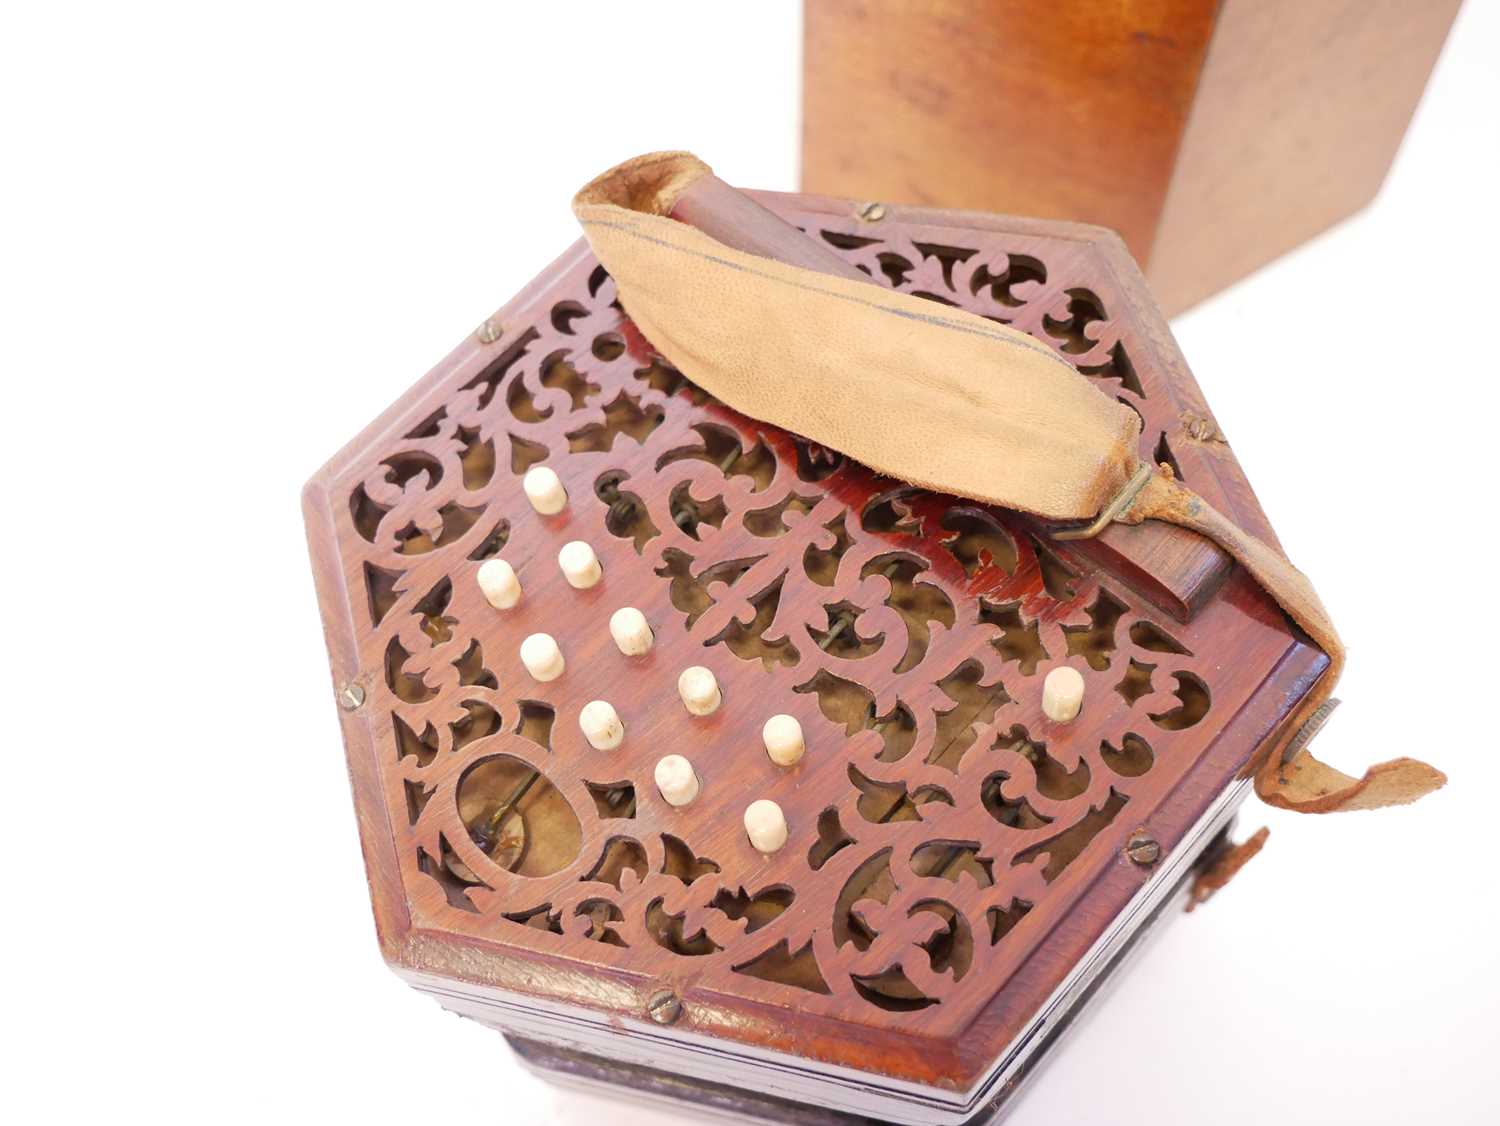 Lachenal 21 key concertina - Image 3 of 11